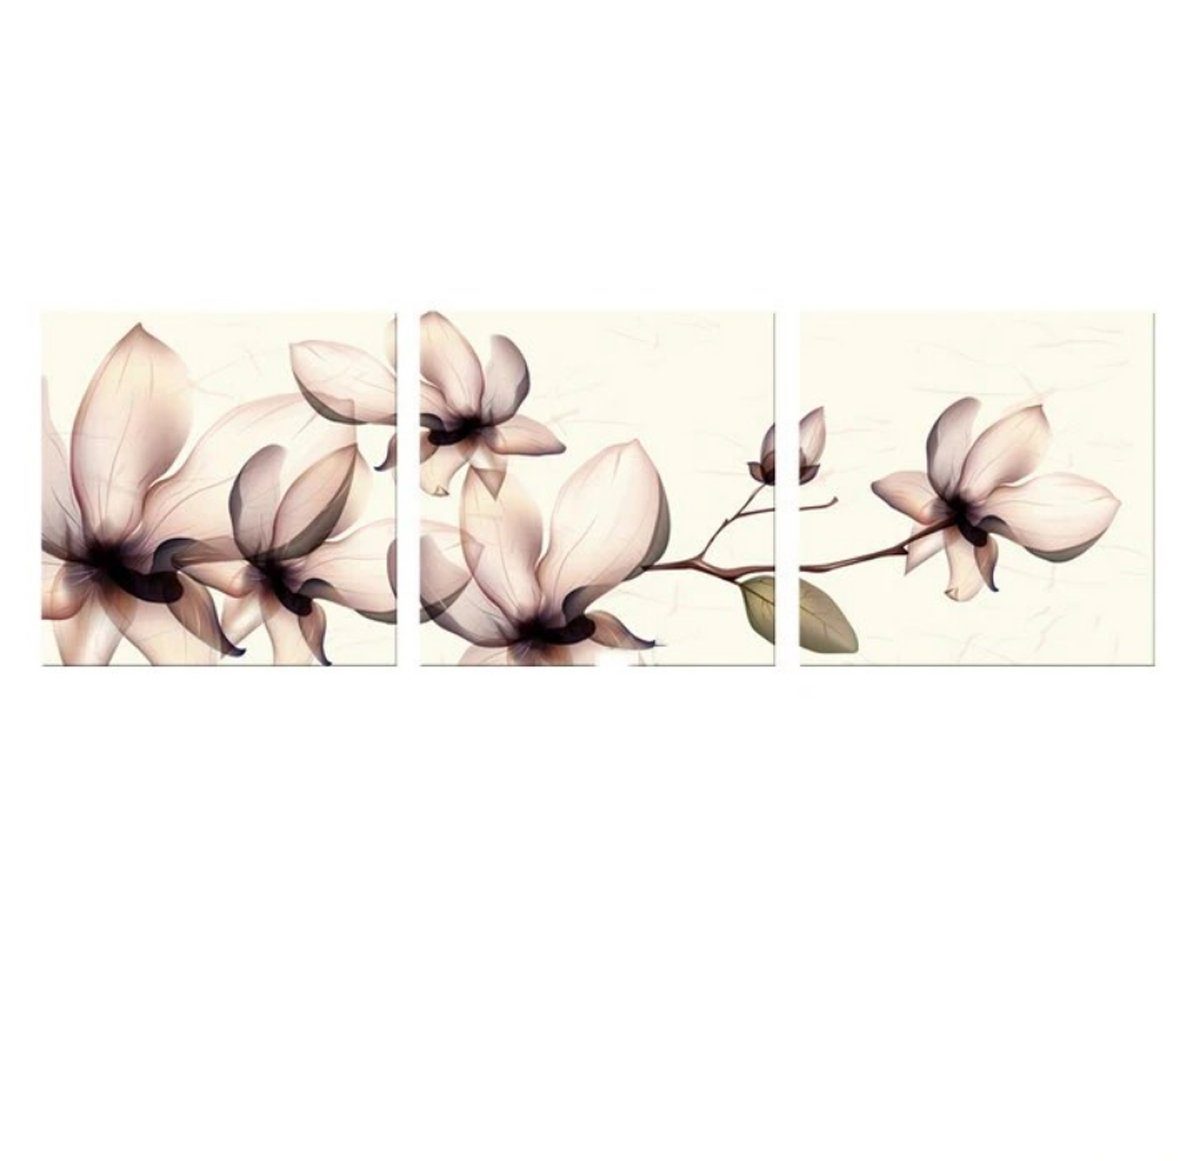 TPFLiving Kunstdruck (OHNE RAHMEN) Poster - Leinwand - Wandbild, 3 Panels Orchideenblüten Poster Wandkunst Leinwandgemälde (Leinwandbild XXL), Farben: Weiß, Rosa, Lila, Grün, Orange, Blau -Größe: 60x60cm